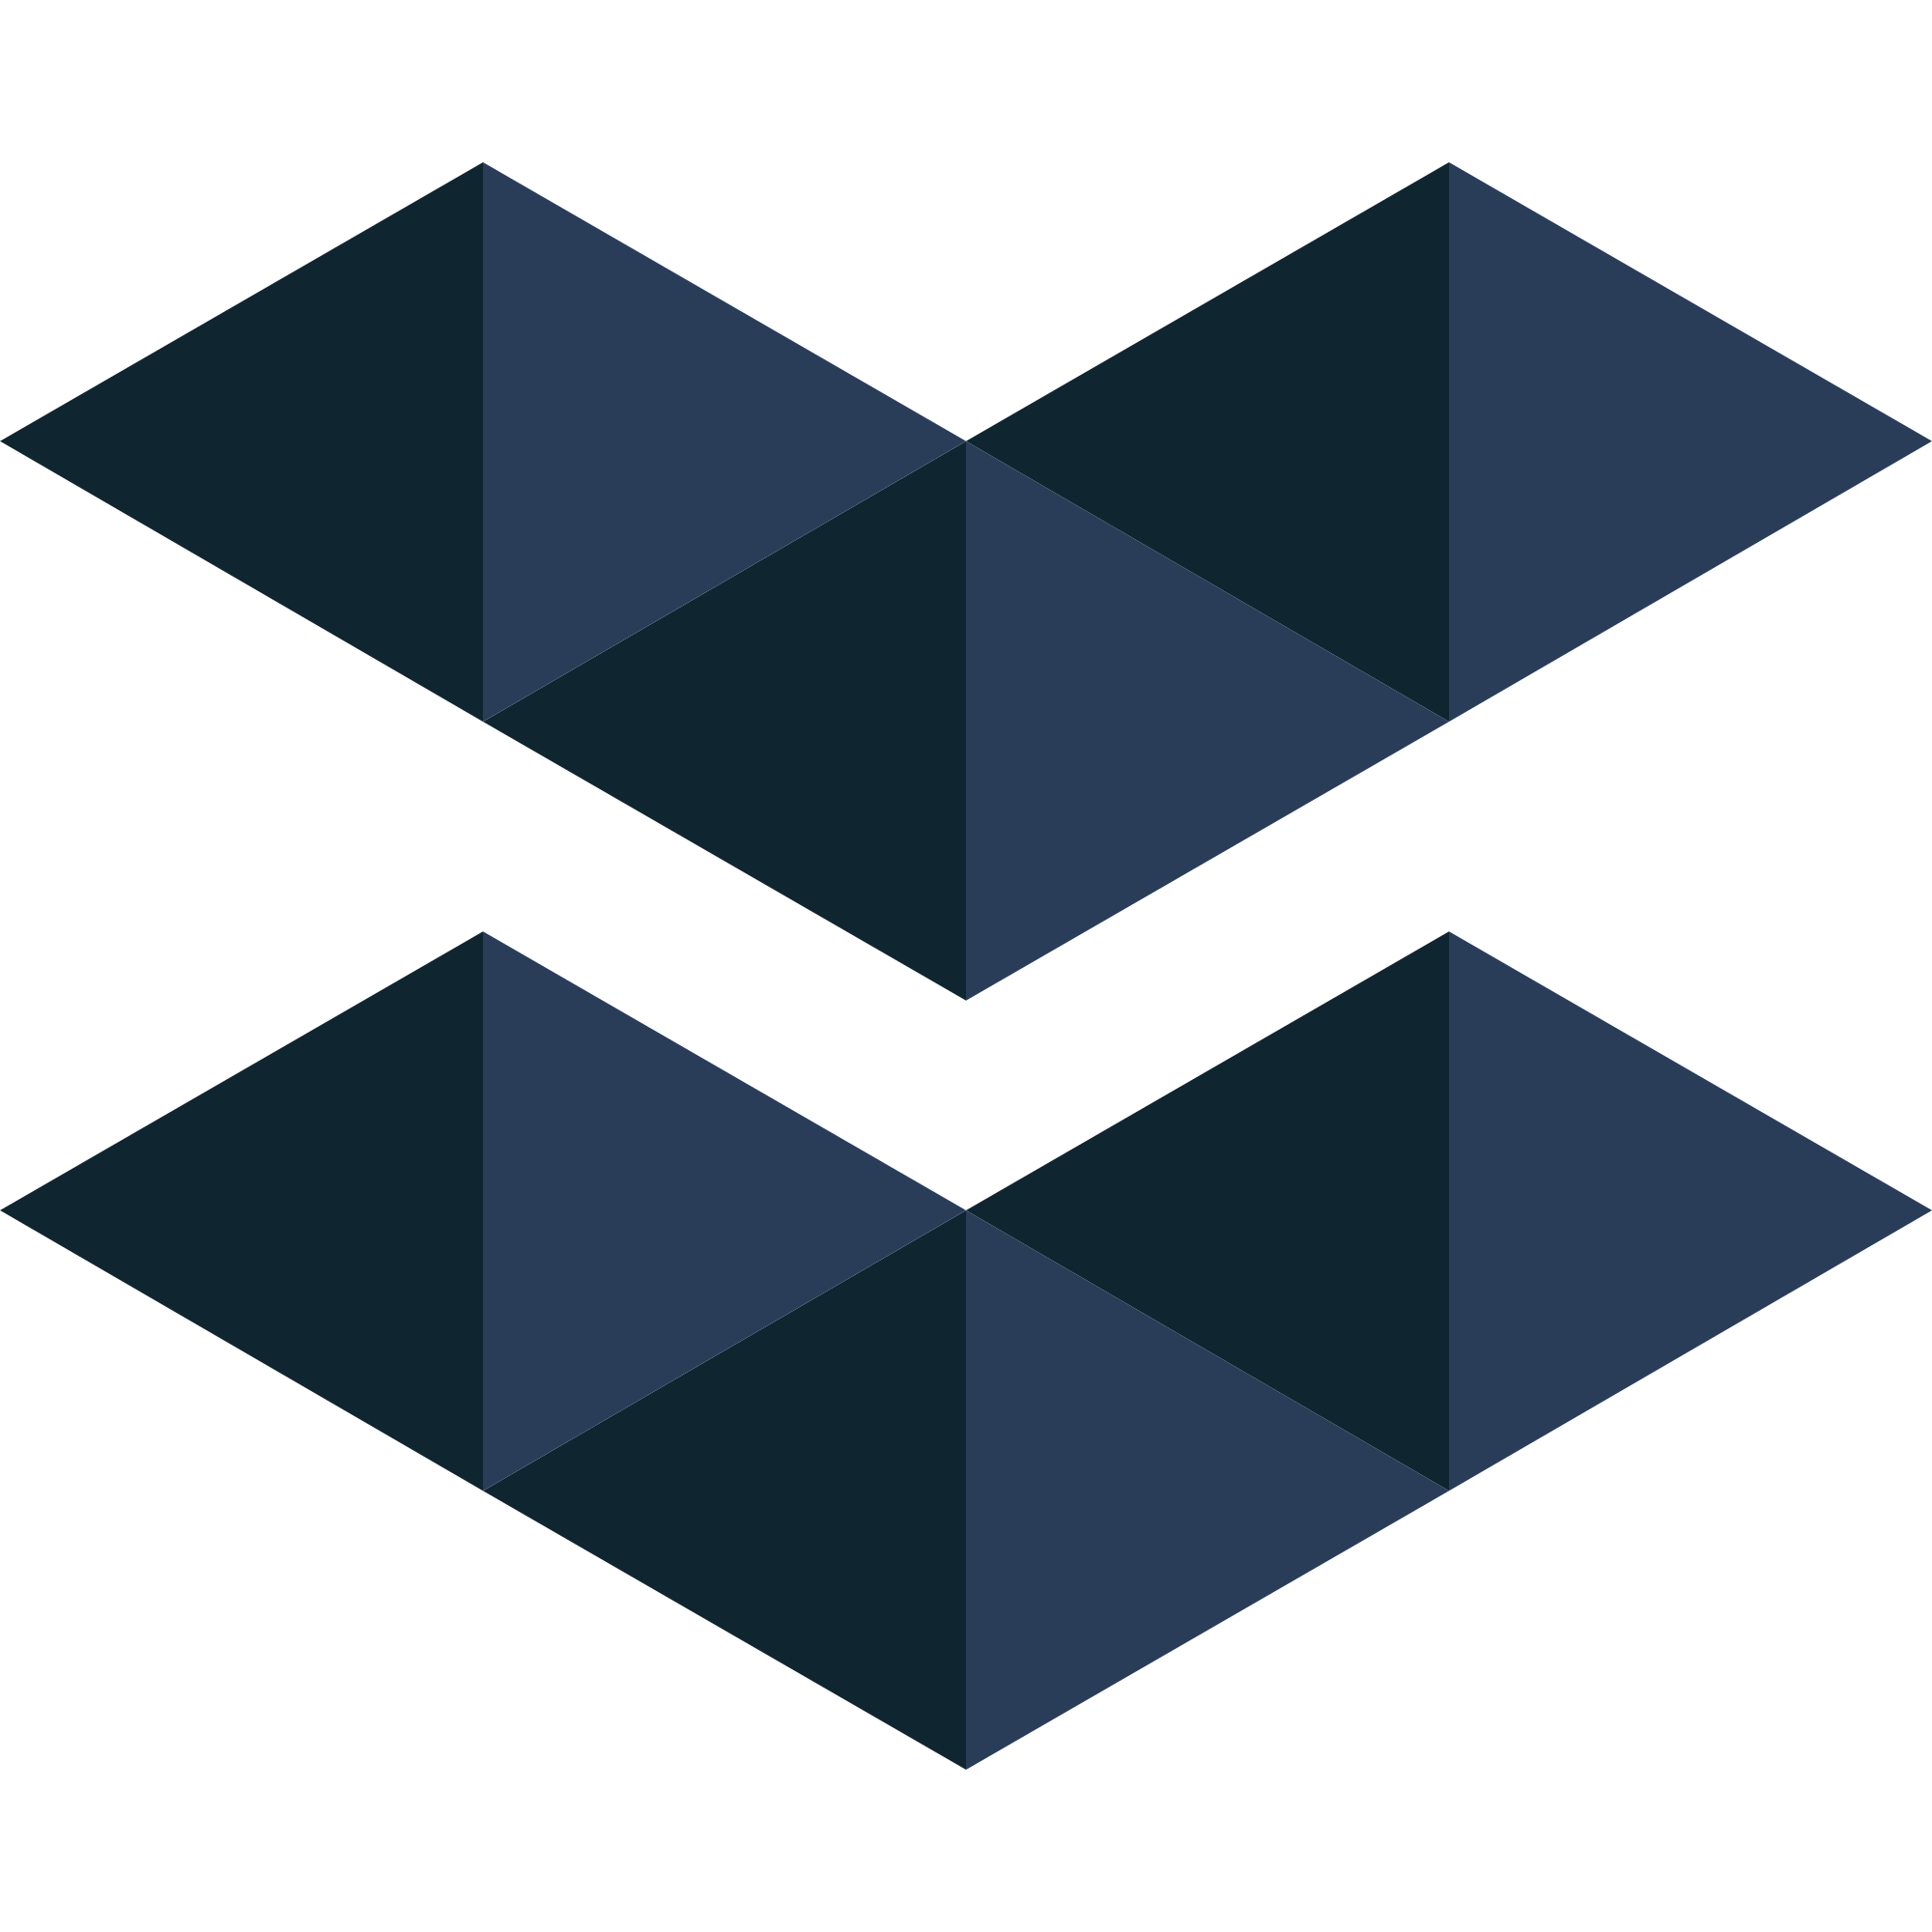 Elastos (ELA) Logo .SVG and .PNG Files Download